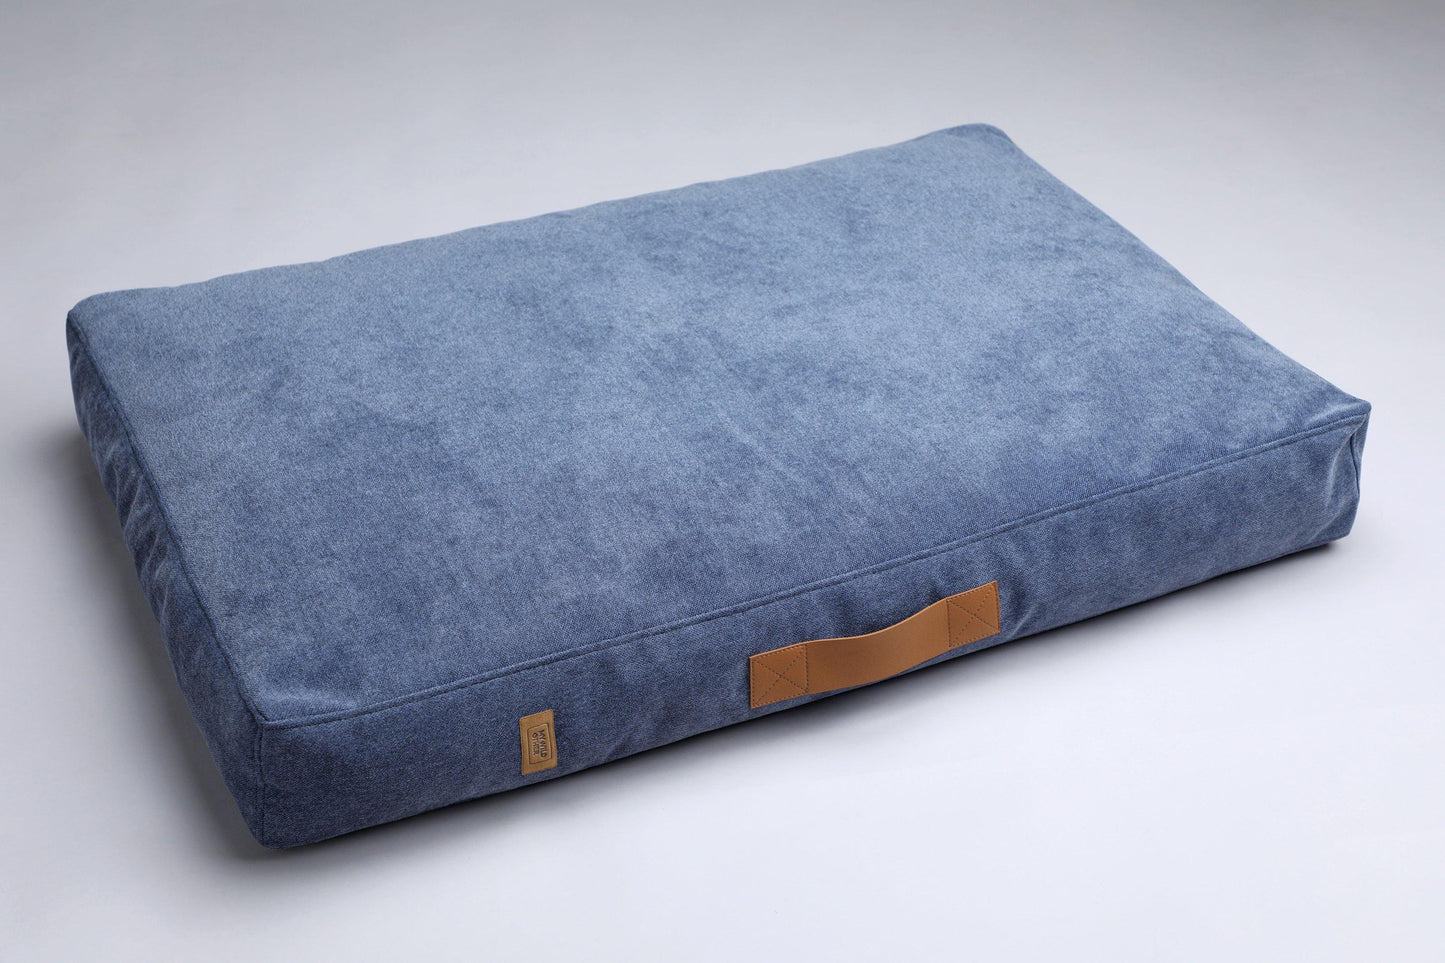 XL only | Scandinavian design dog bed | 2-sided | STEEL BLUE - premium dog goods handmade in Europe by animalistus